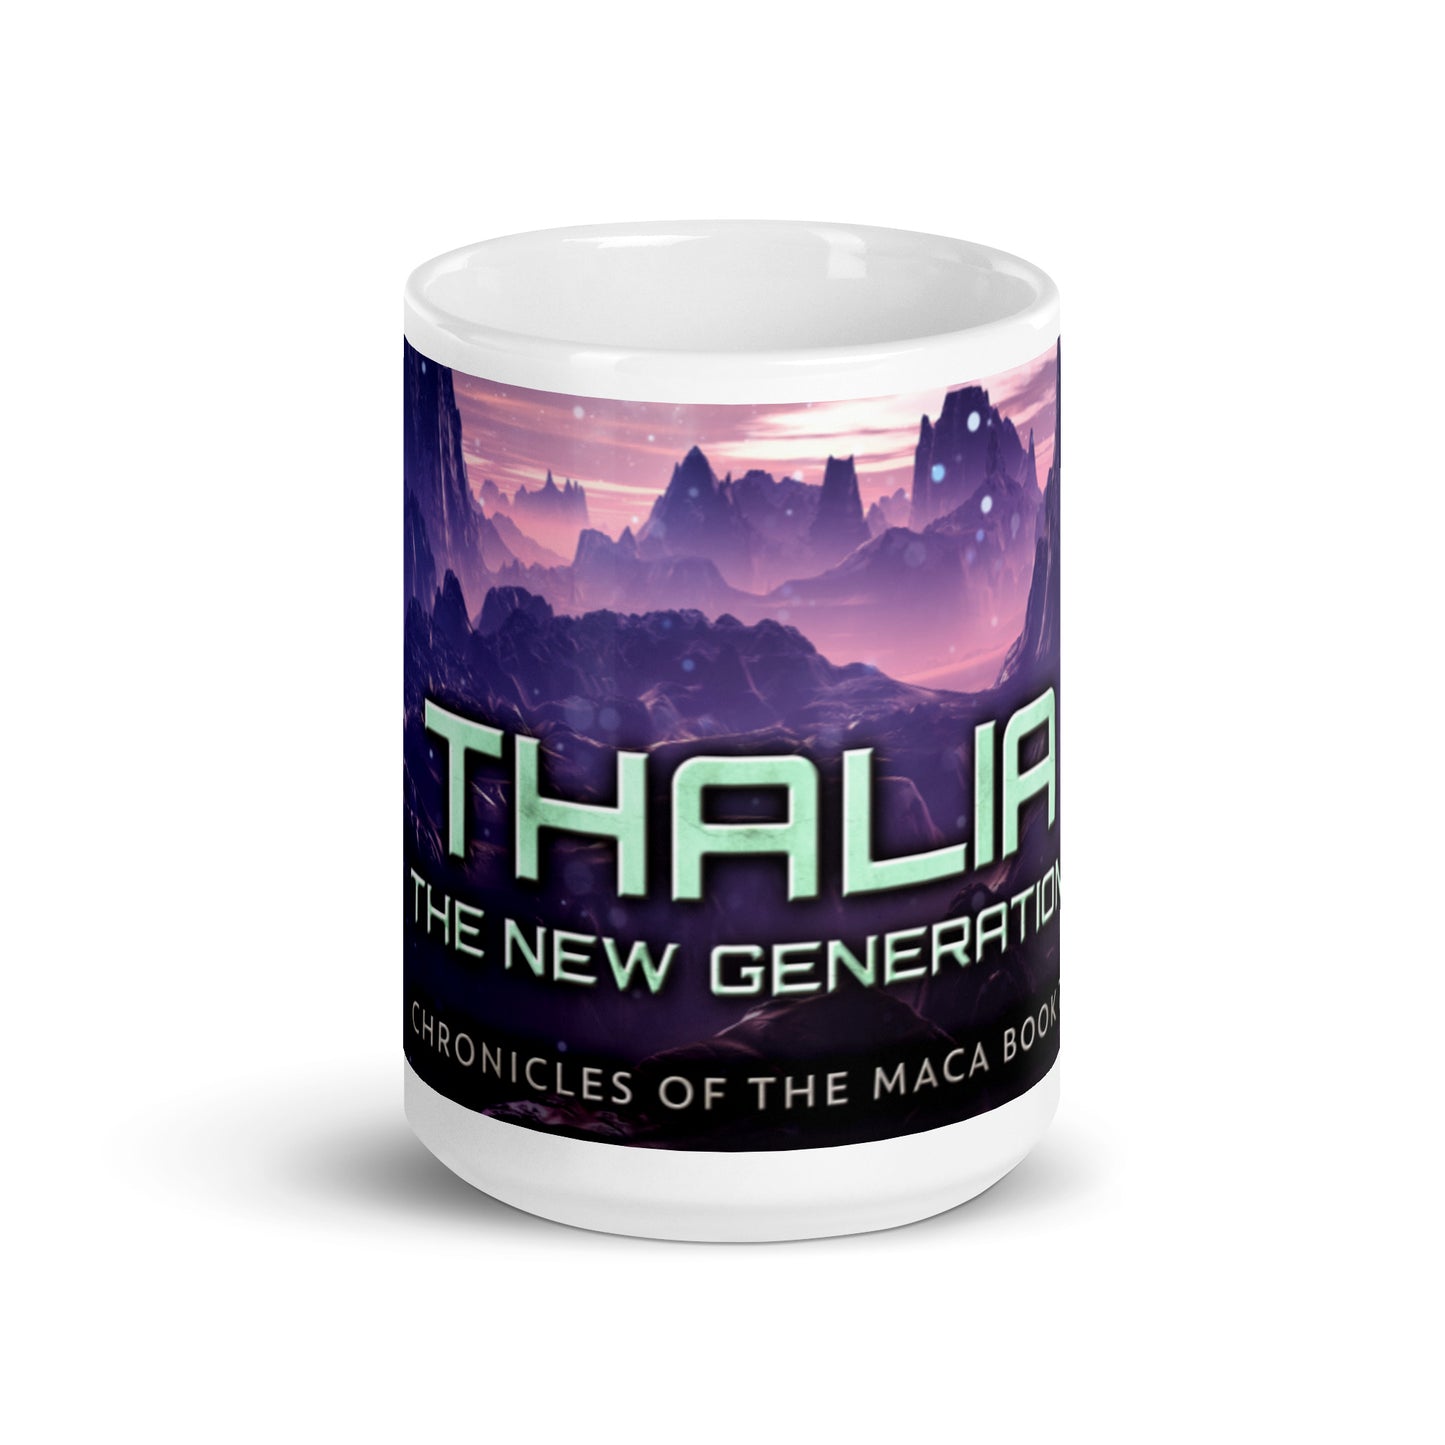 Thalia - The New Generation - White Coffee Mug